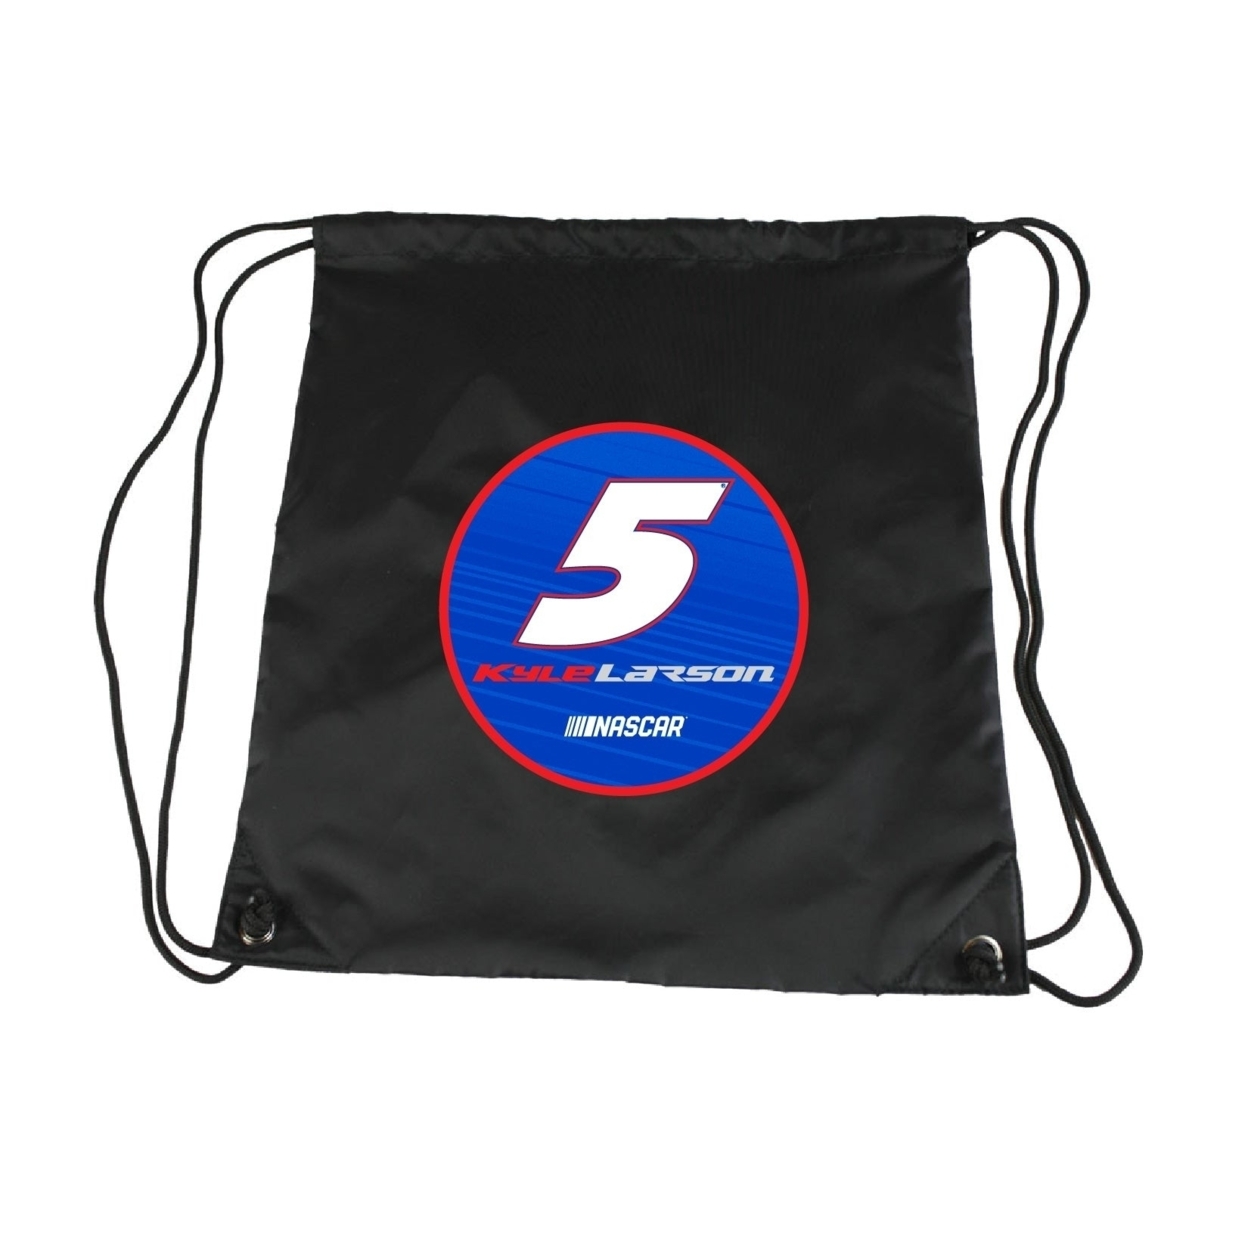 Kyle Larson # 5 Nascar Cinch Bag With Drawstring New For 2021